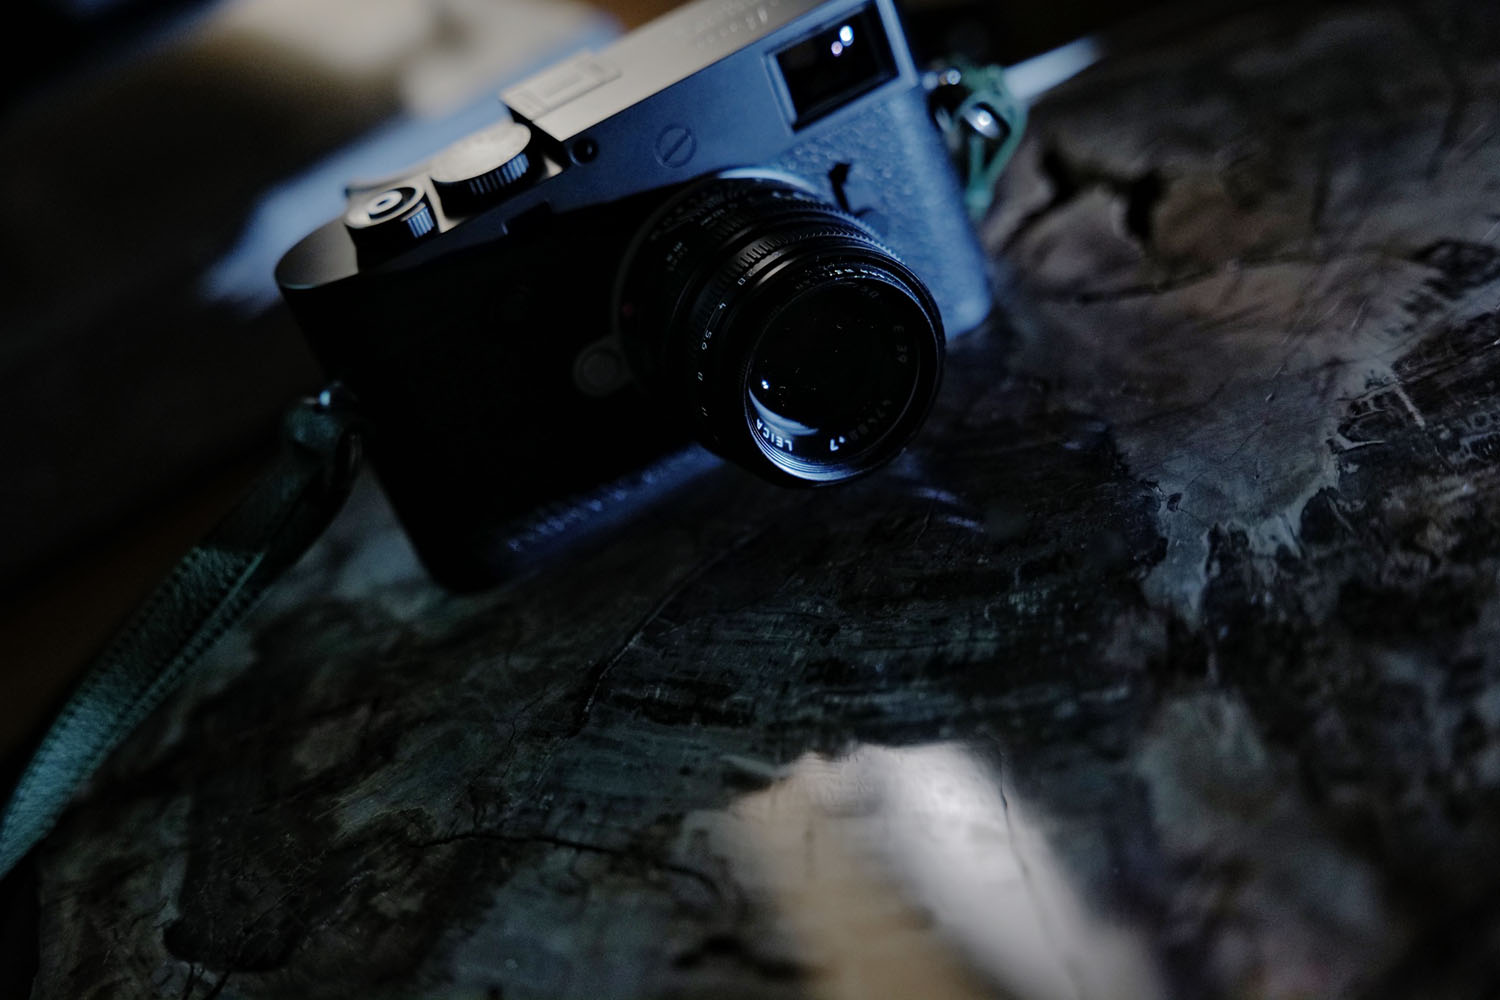 Leica SUMMICRON ズミクロン M 50mm F/2.0